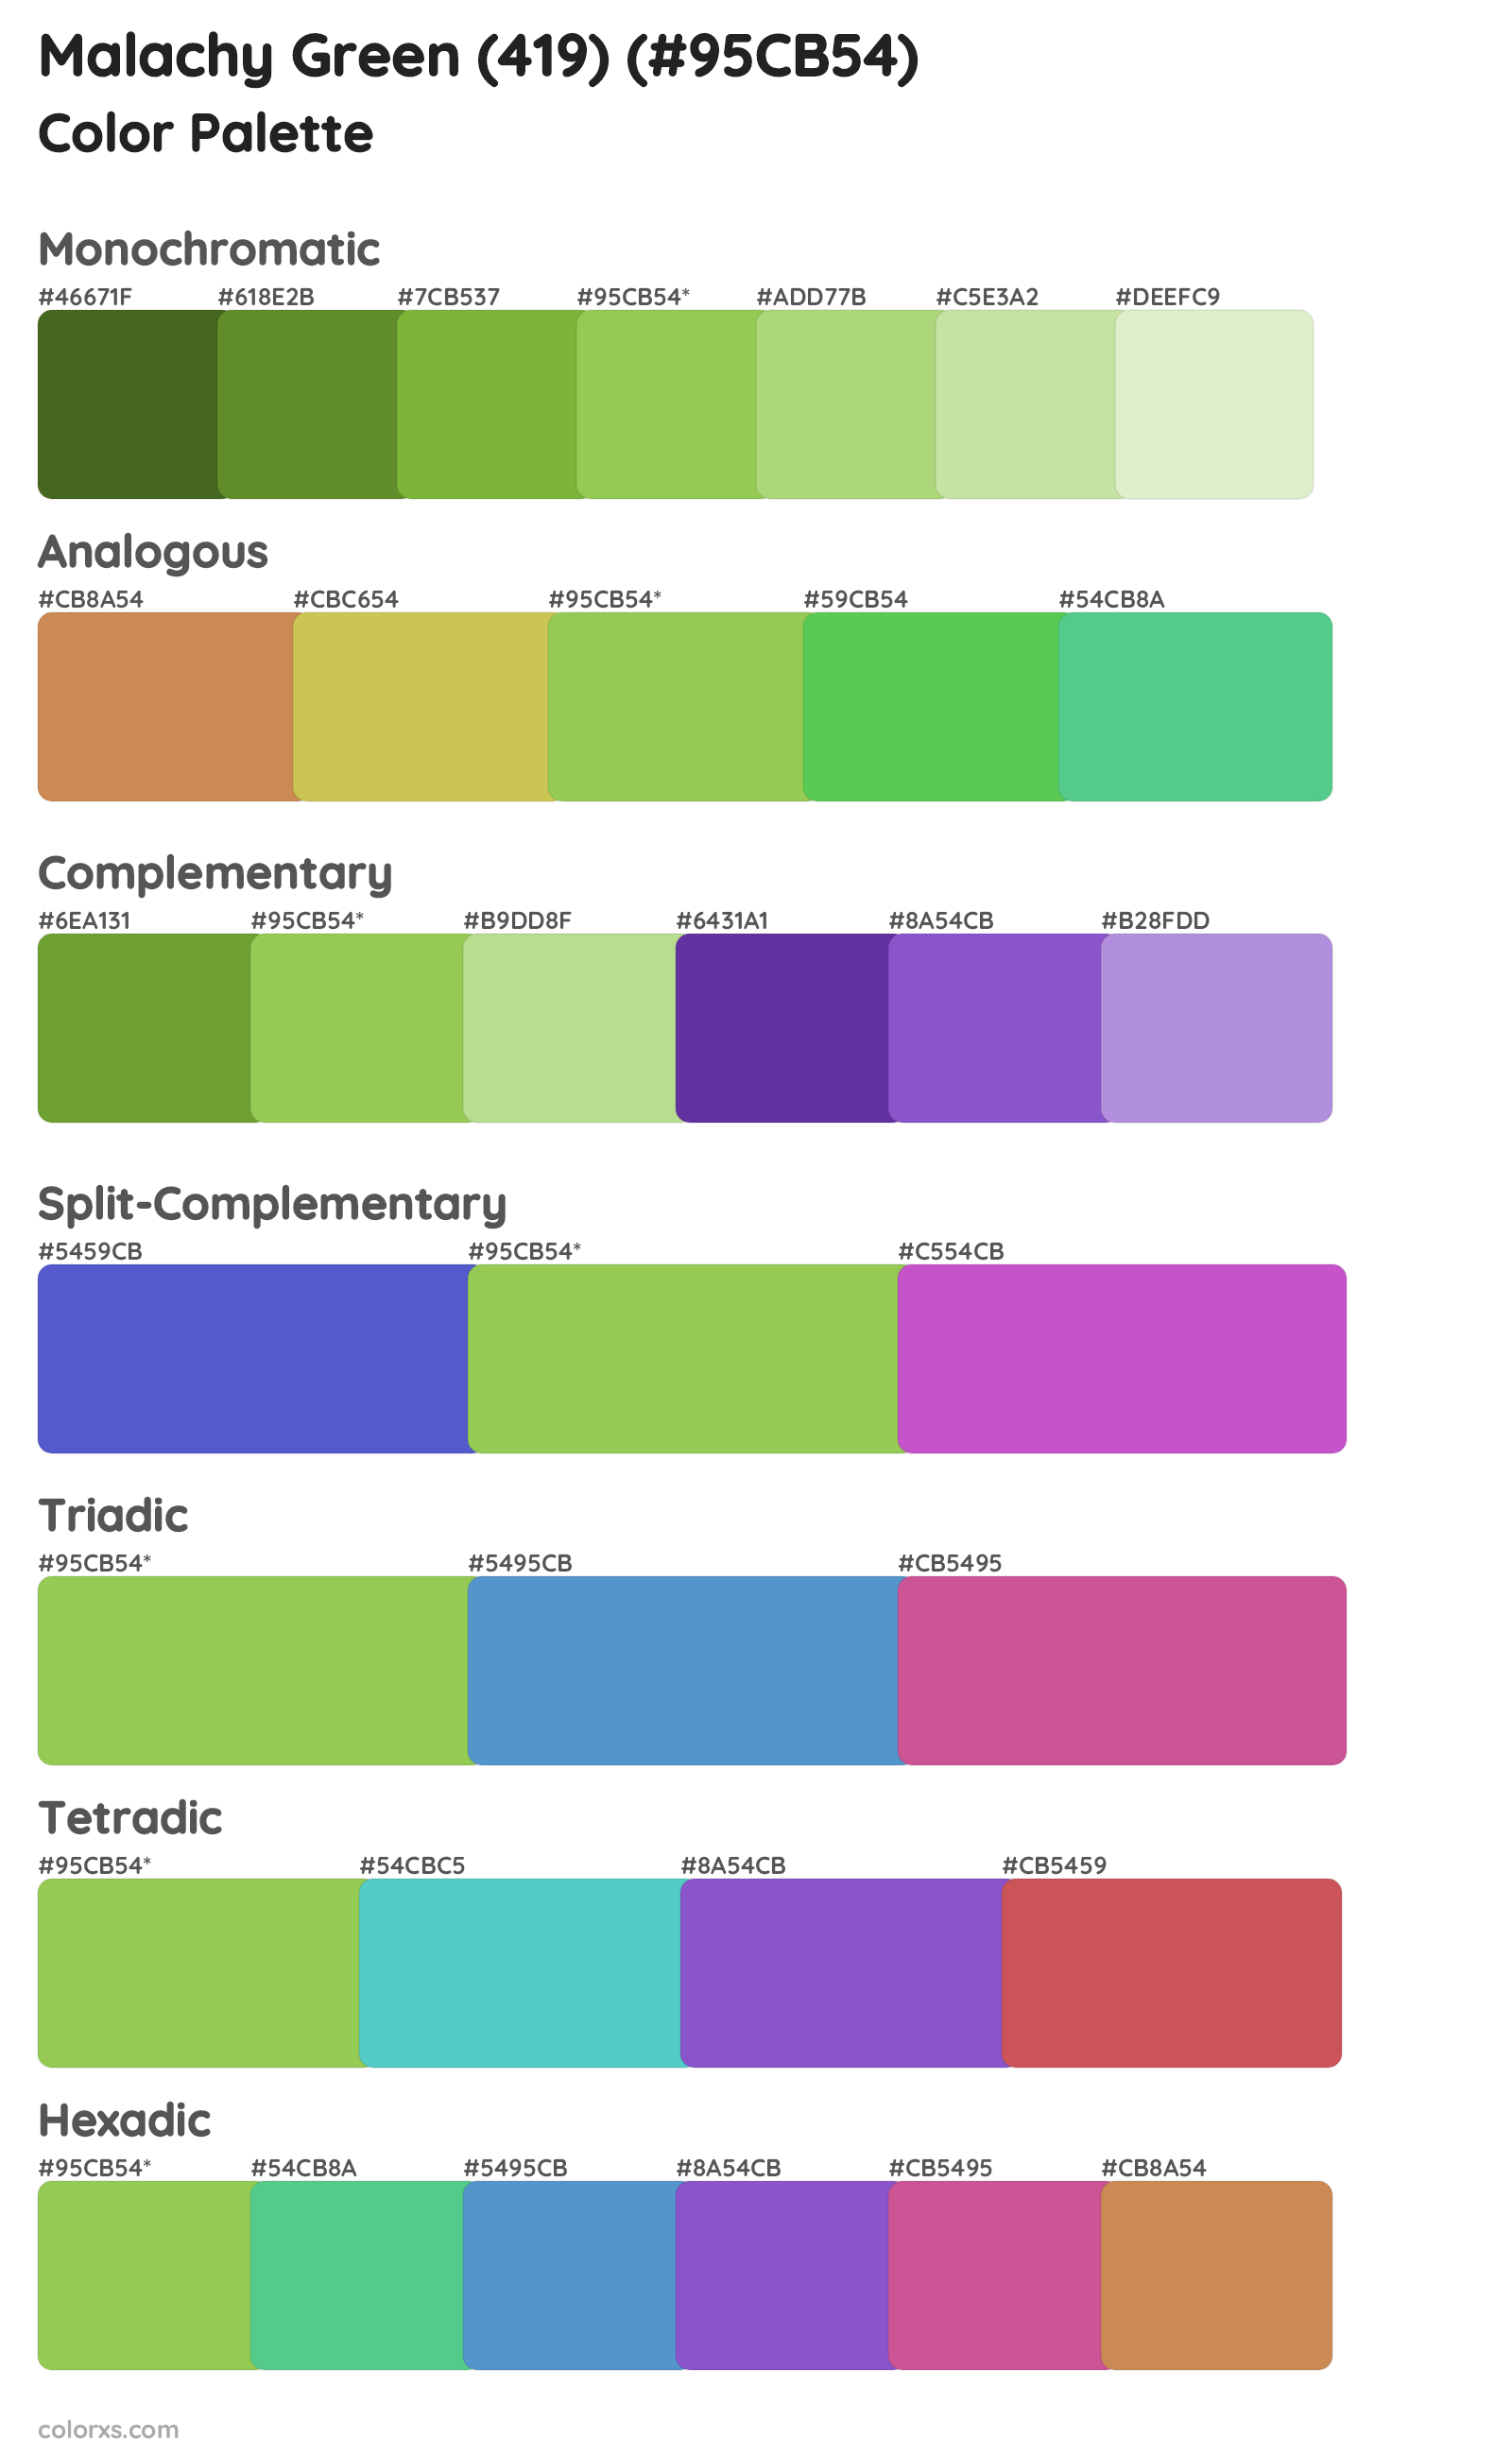 Malachy Green (419) Color Scheme Palettes